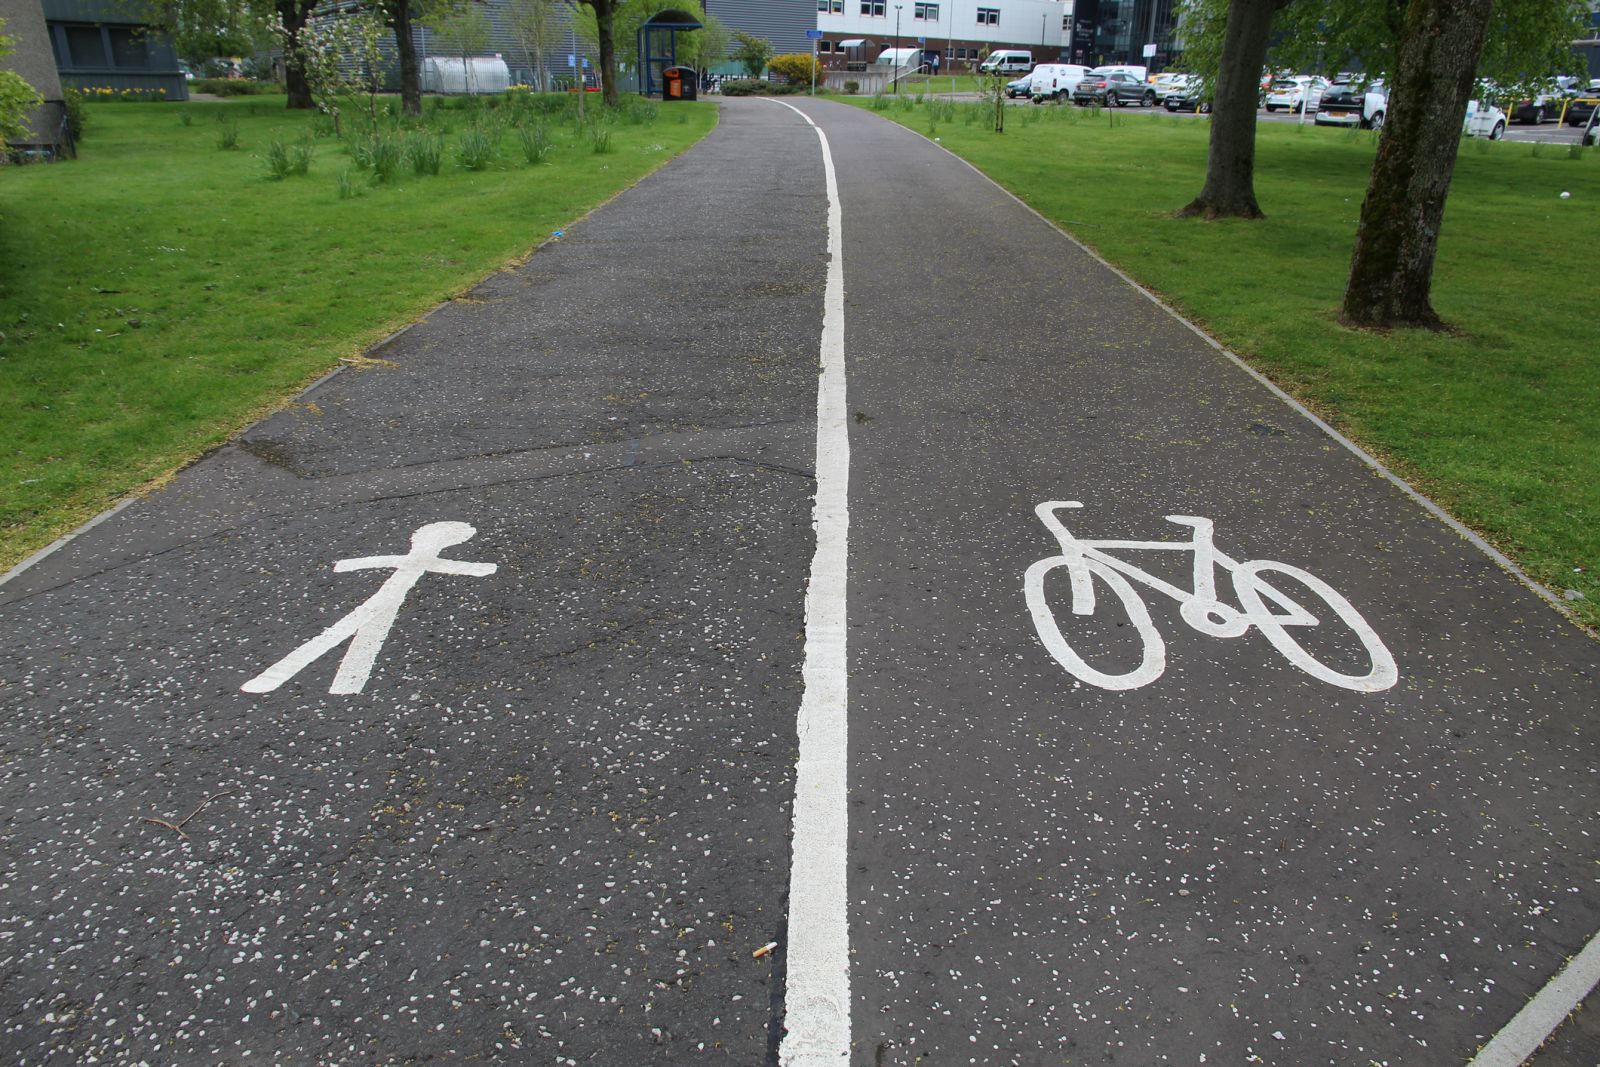 Cycle lane on pavement banner image